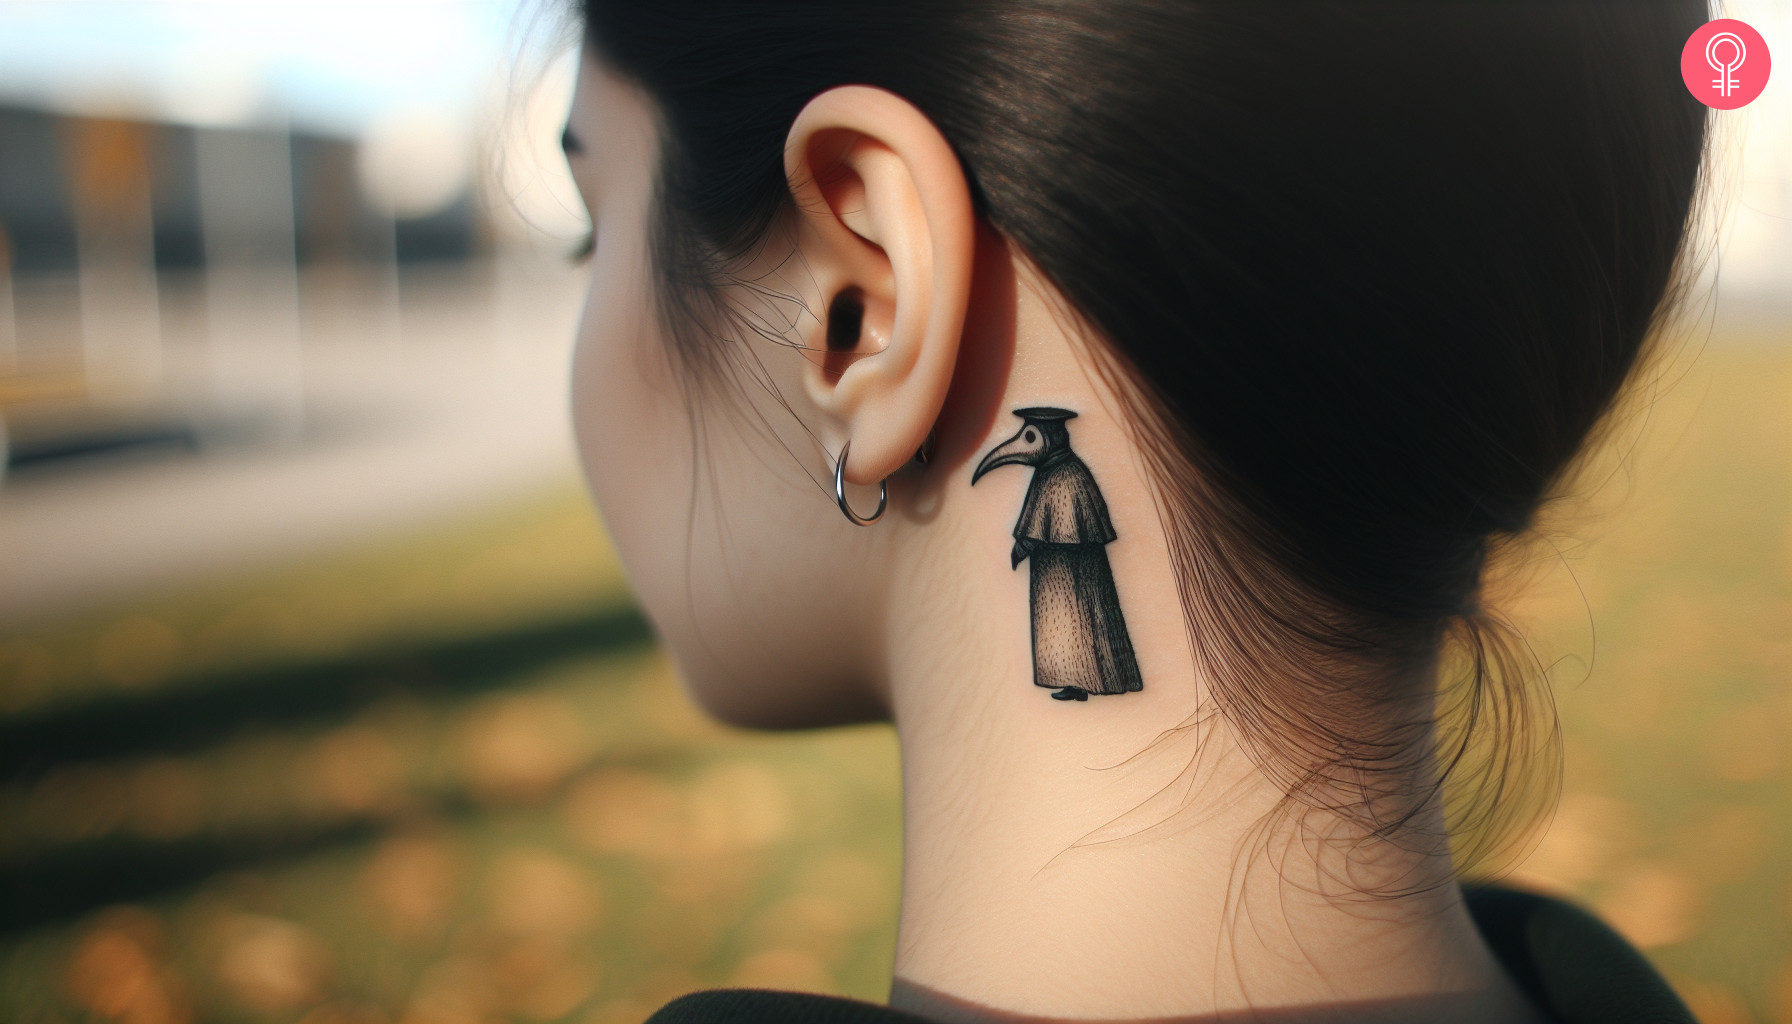 A plague doctor tattoo behind the ear